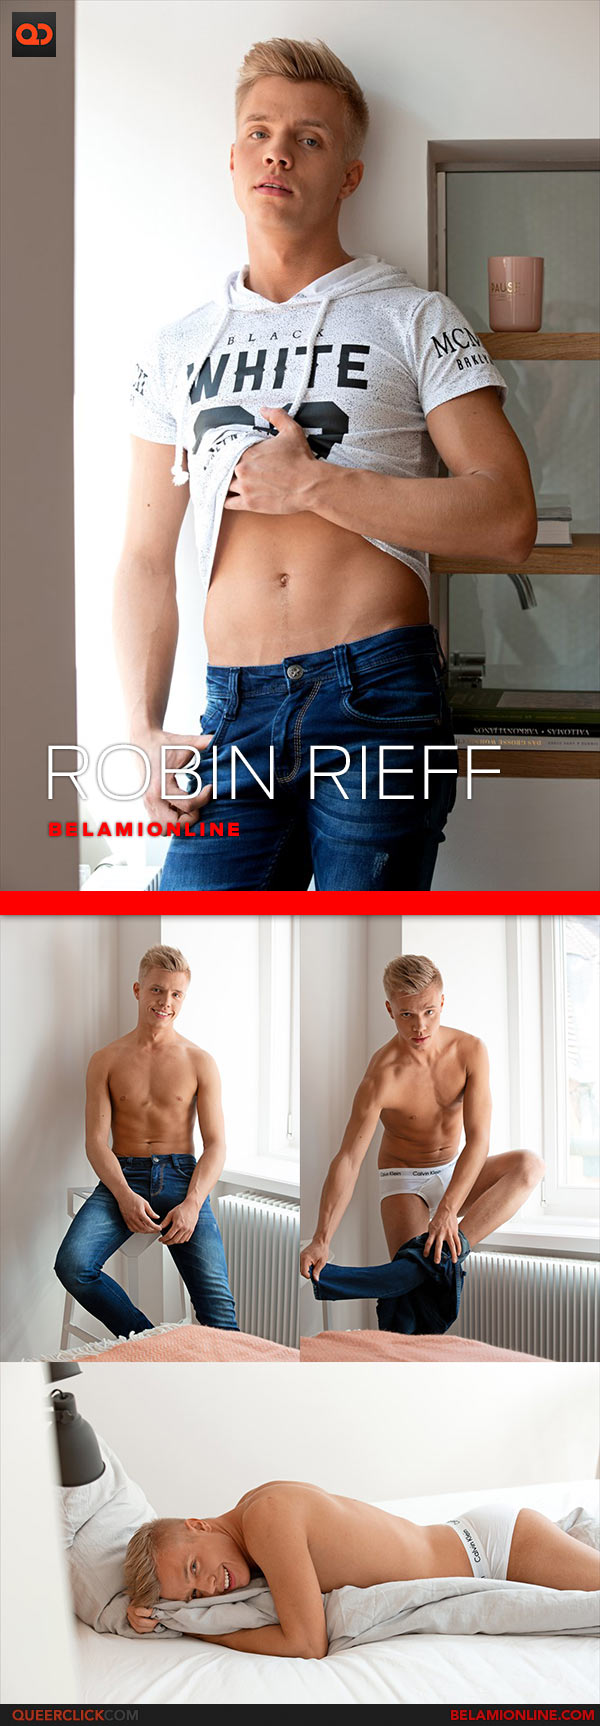 Bel Ami Online: Robin Rieff - Pin Ups